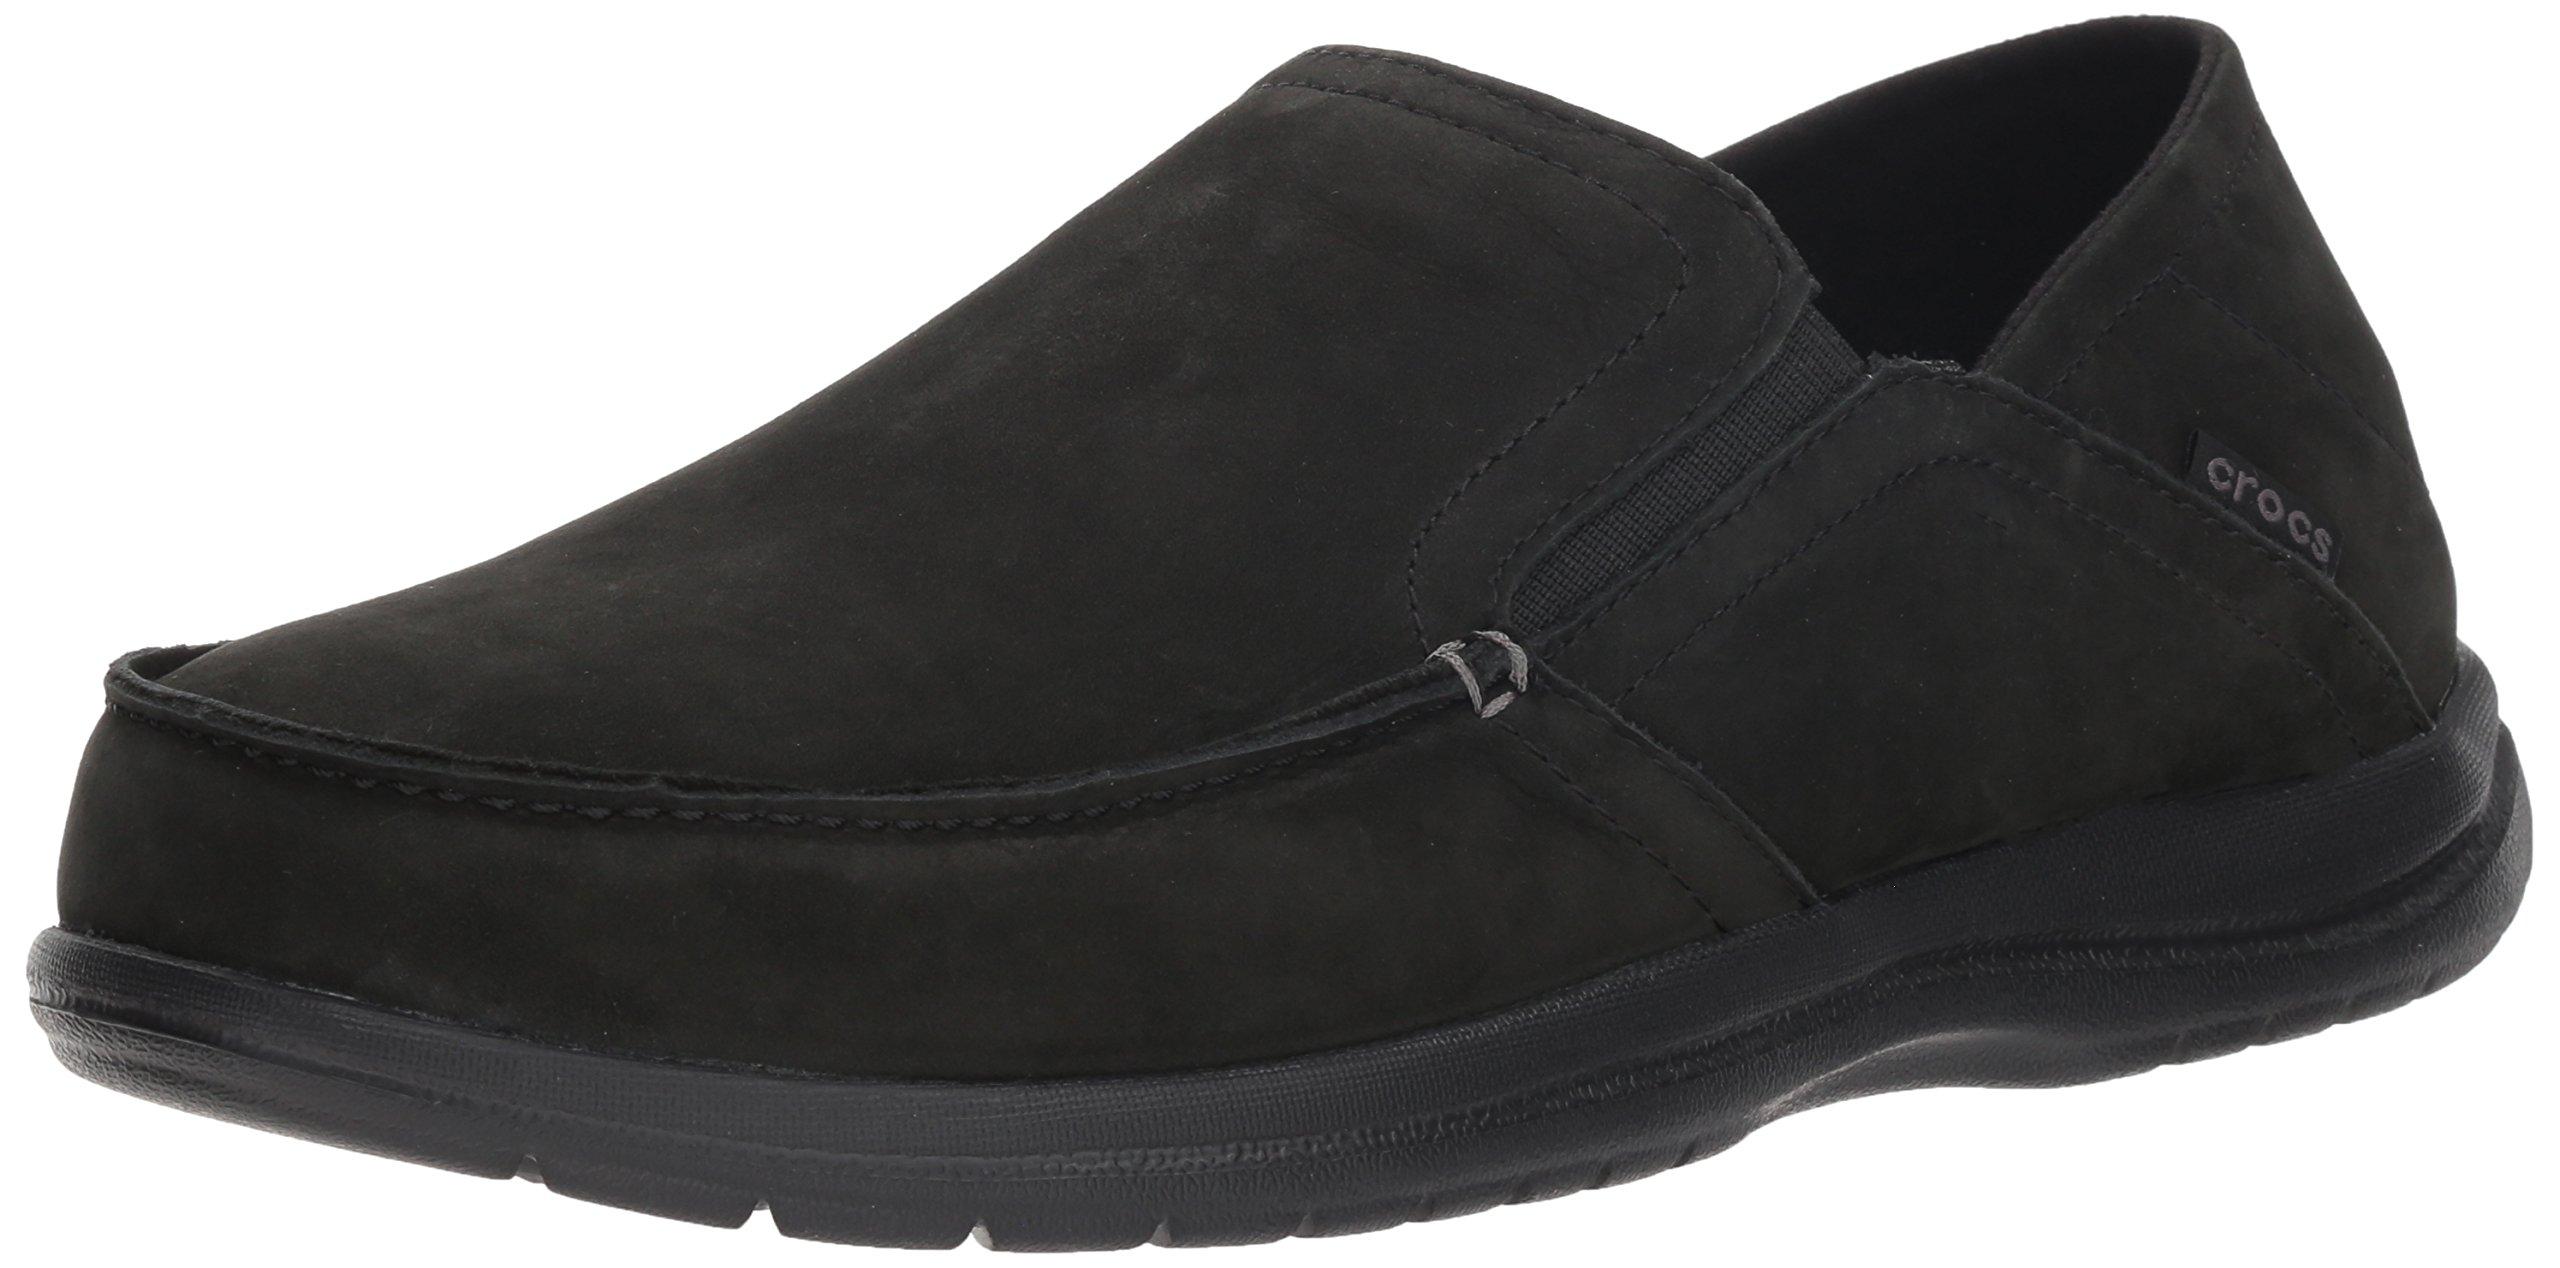 Crocs™ Santa Cruz Convertible Leather Slip-on Loafer Flat in Black ...